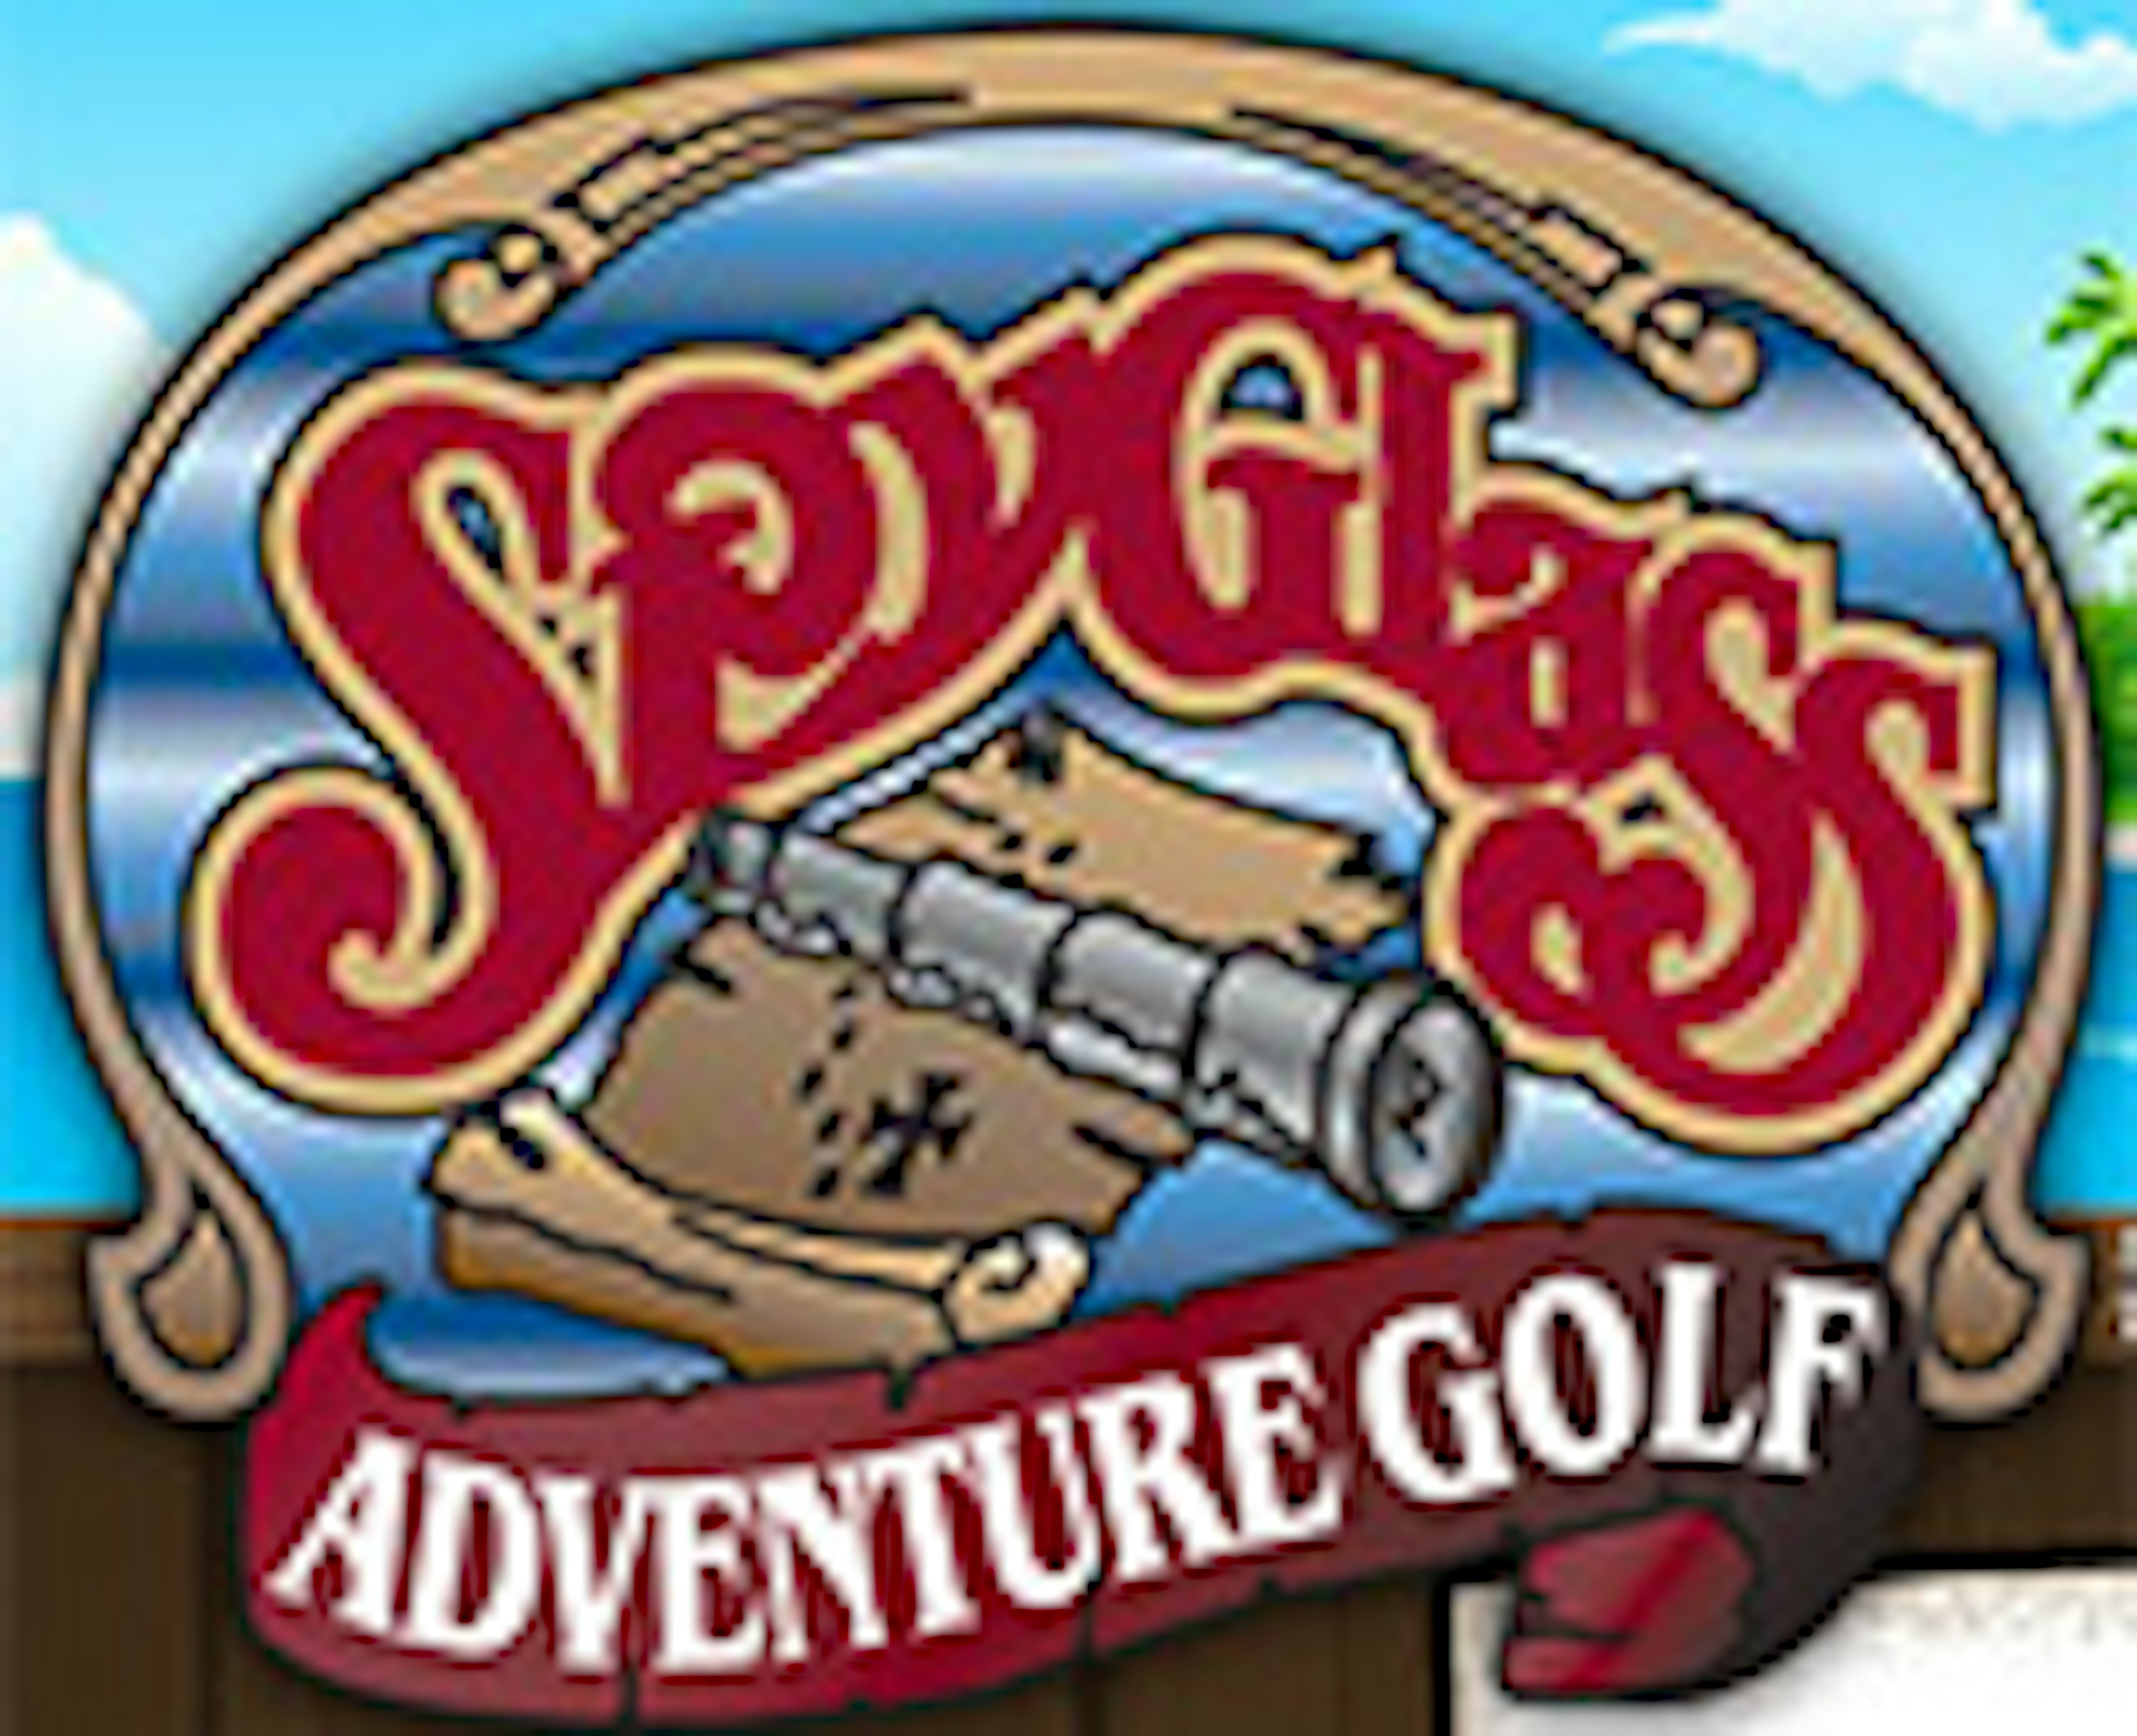 Spy Glass Adventure Golf